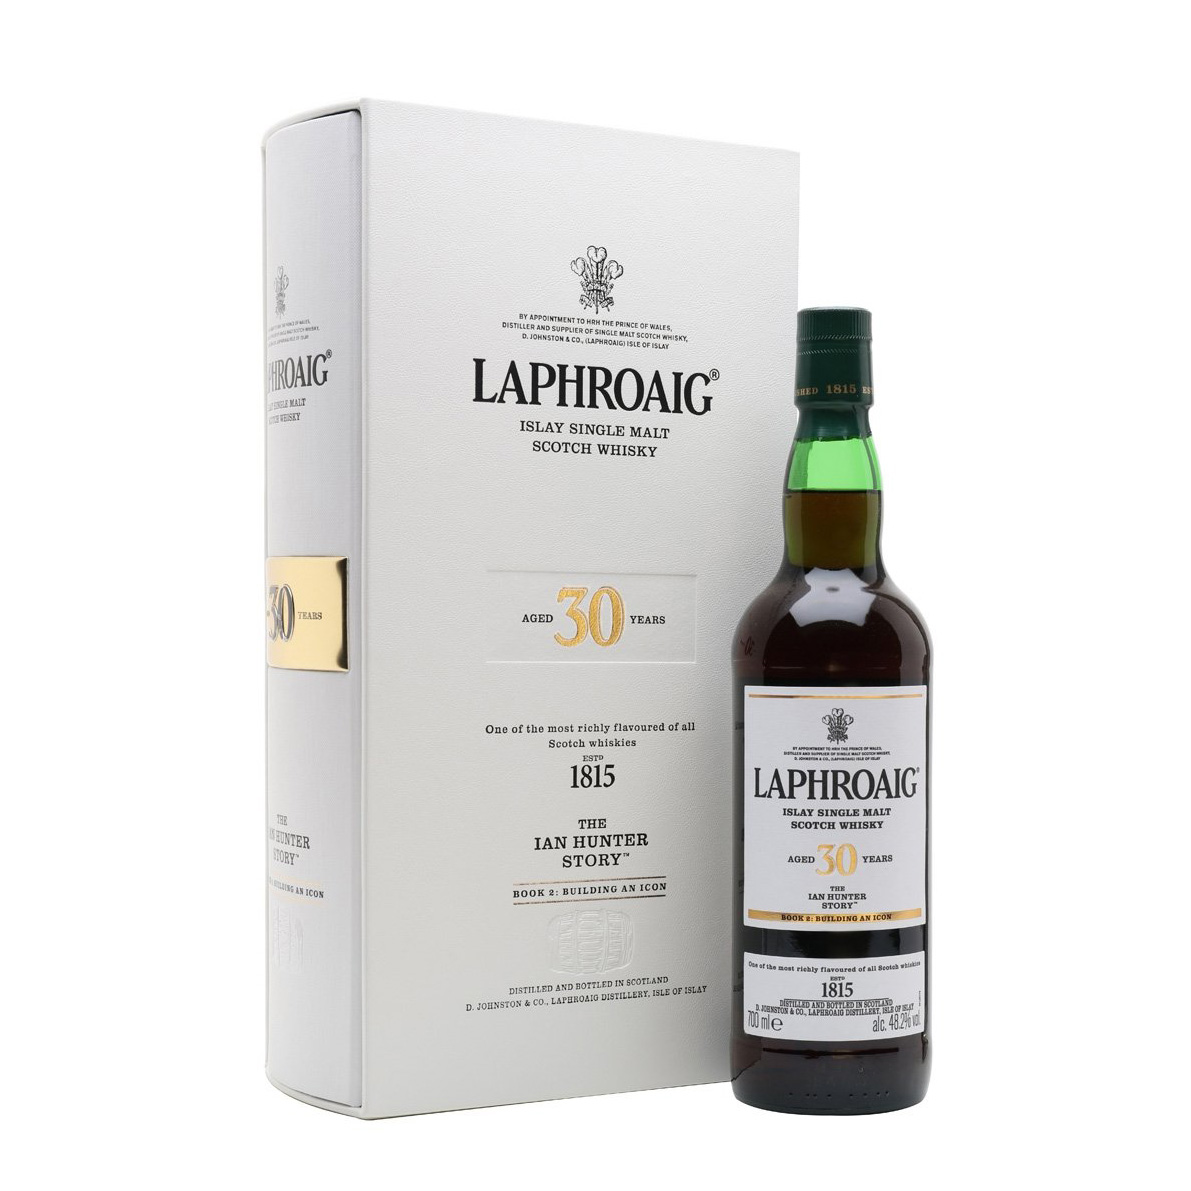 Laphroaig 30 Year Old Single Malt Scotch Whisky (The Ian Hunter Story Book 2)